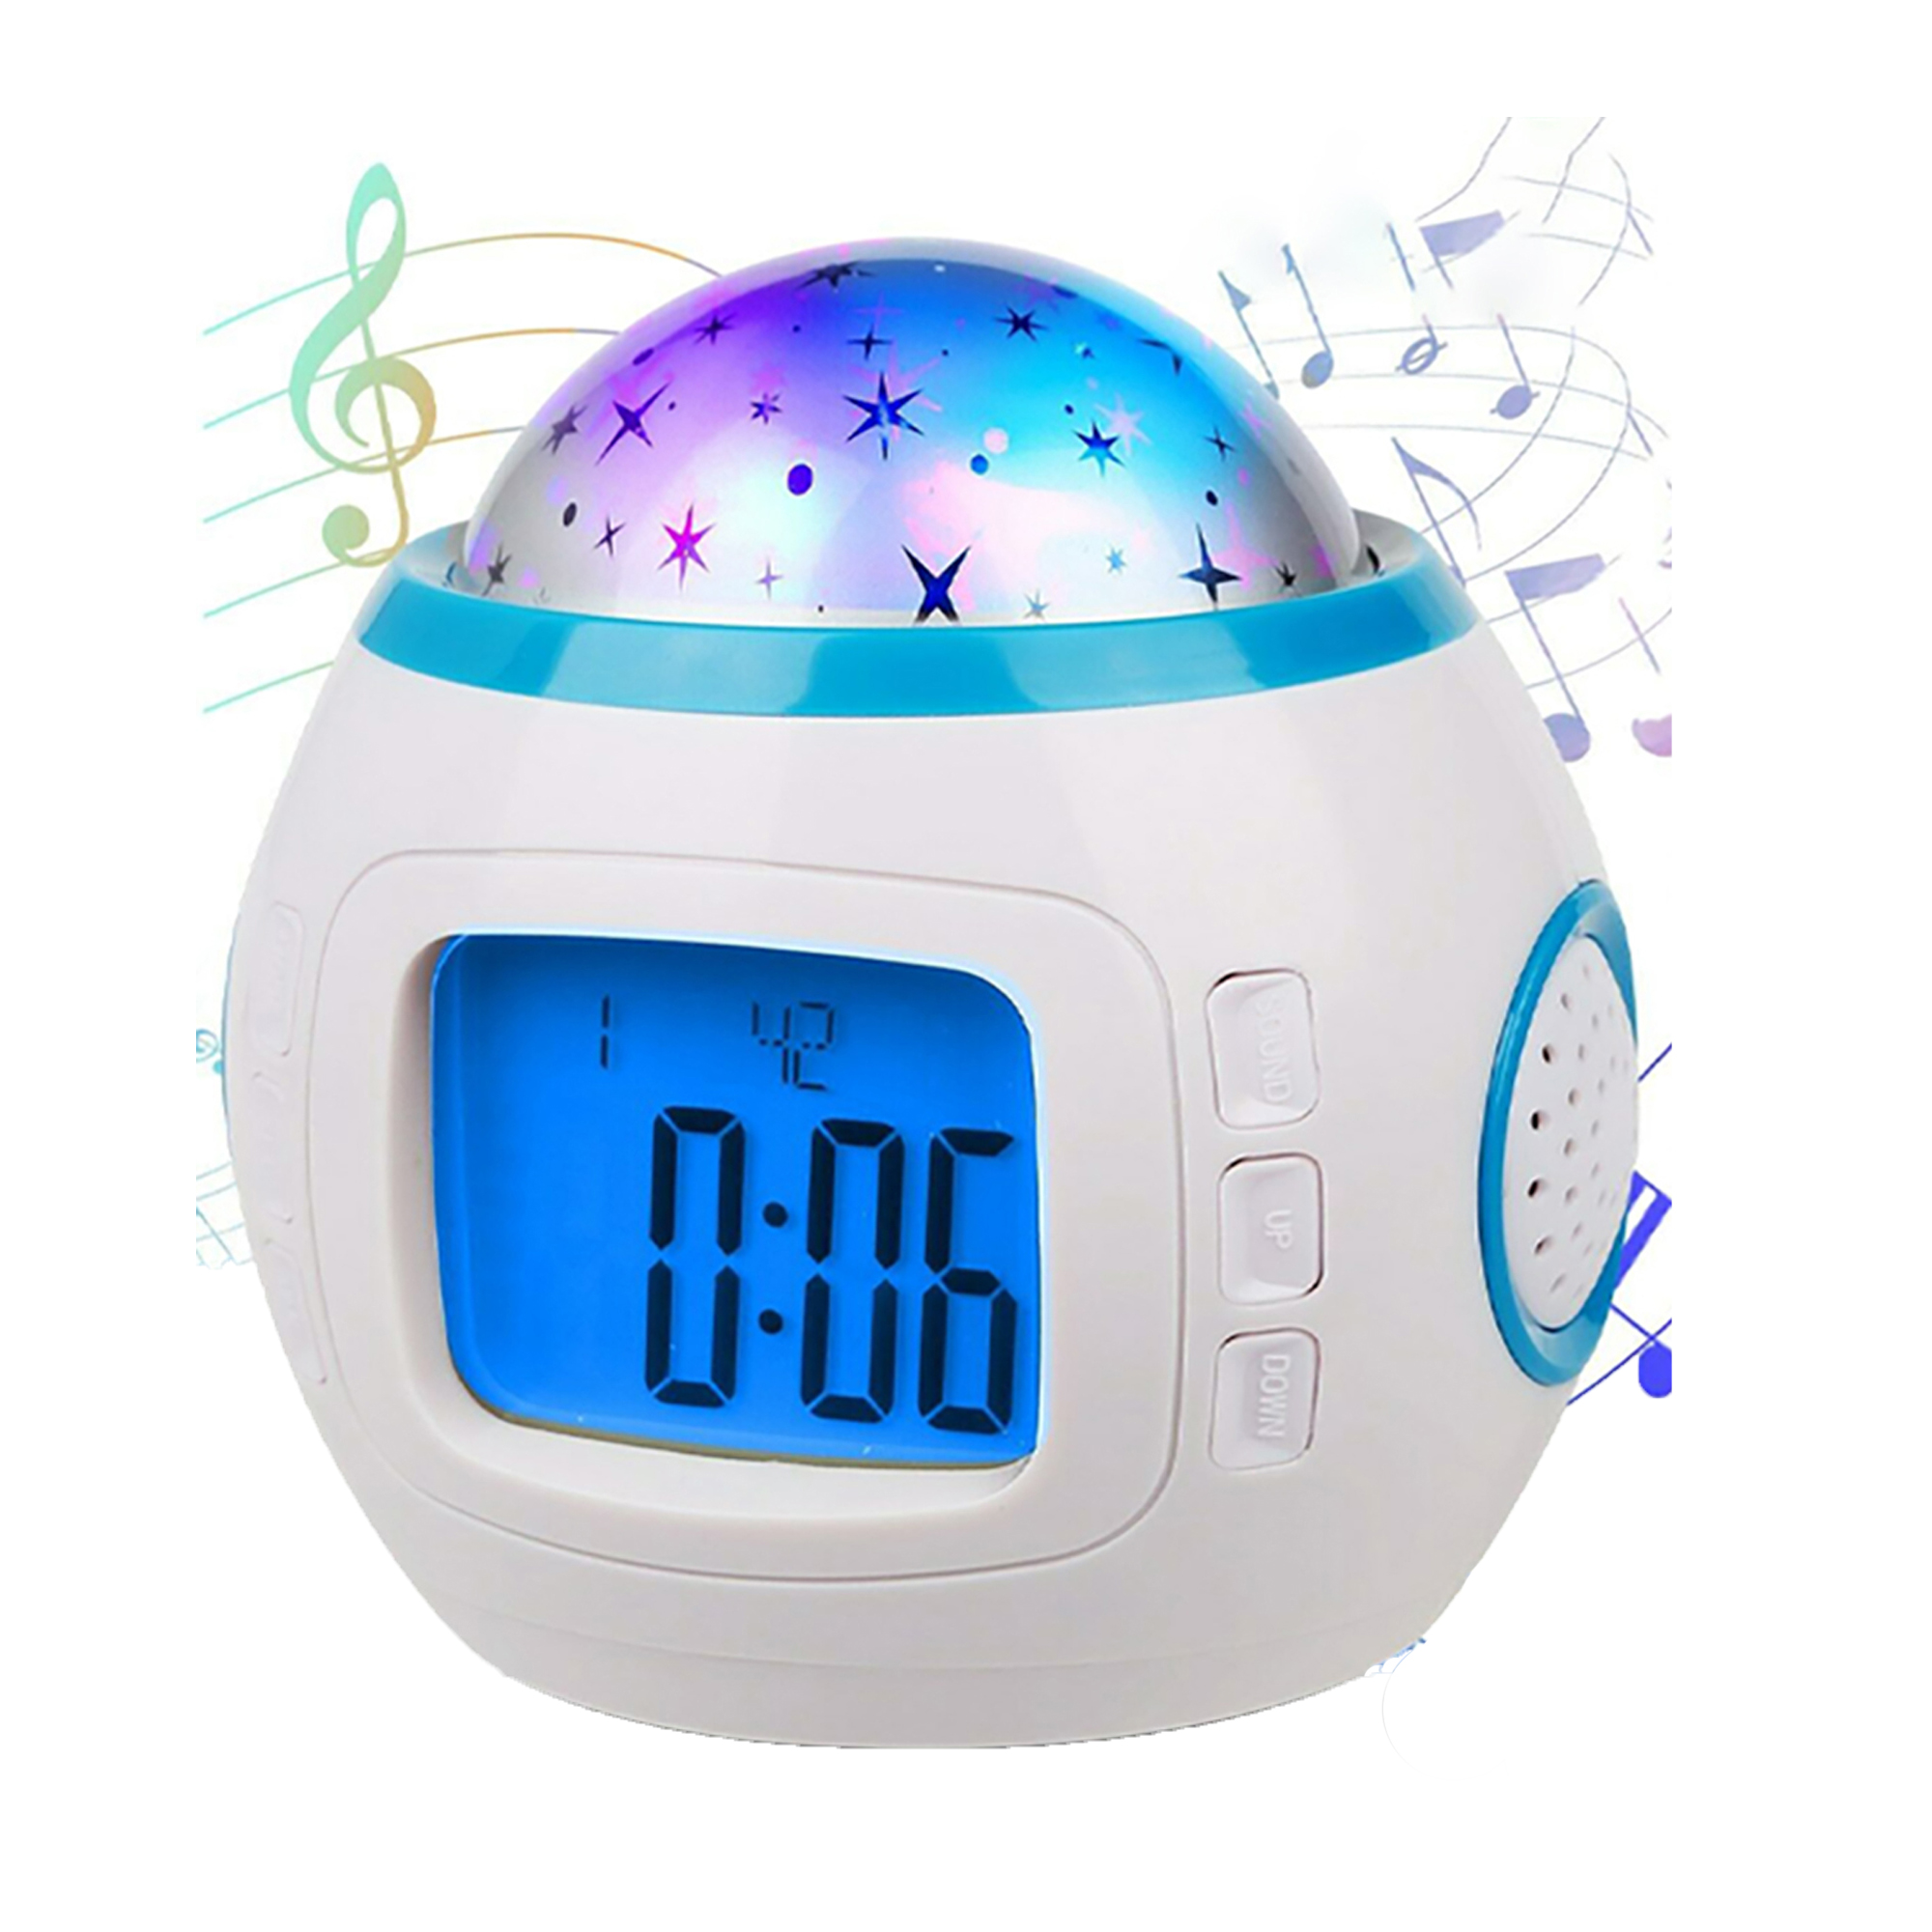 Dreamy Music Starry Sky Projector Alarm Clock Projection Night Light Desk Clock Calendar Children Gifts White